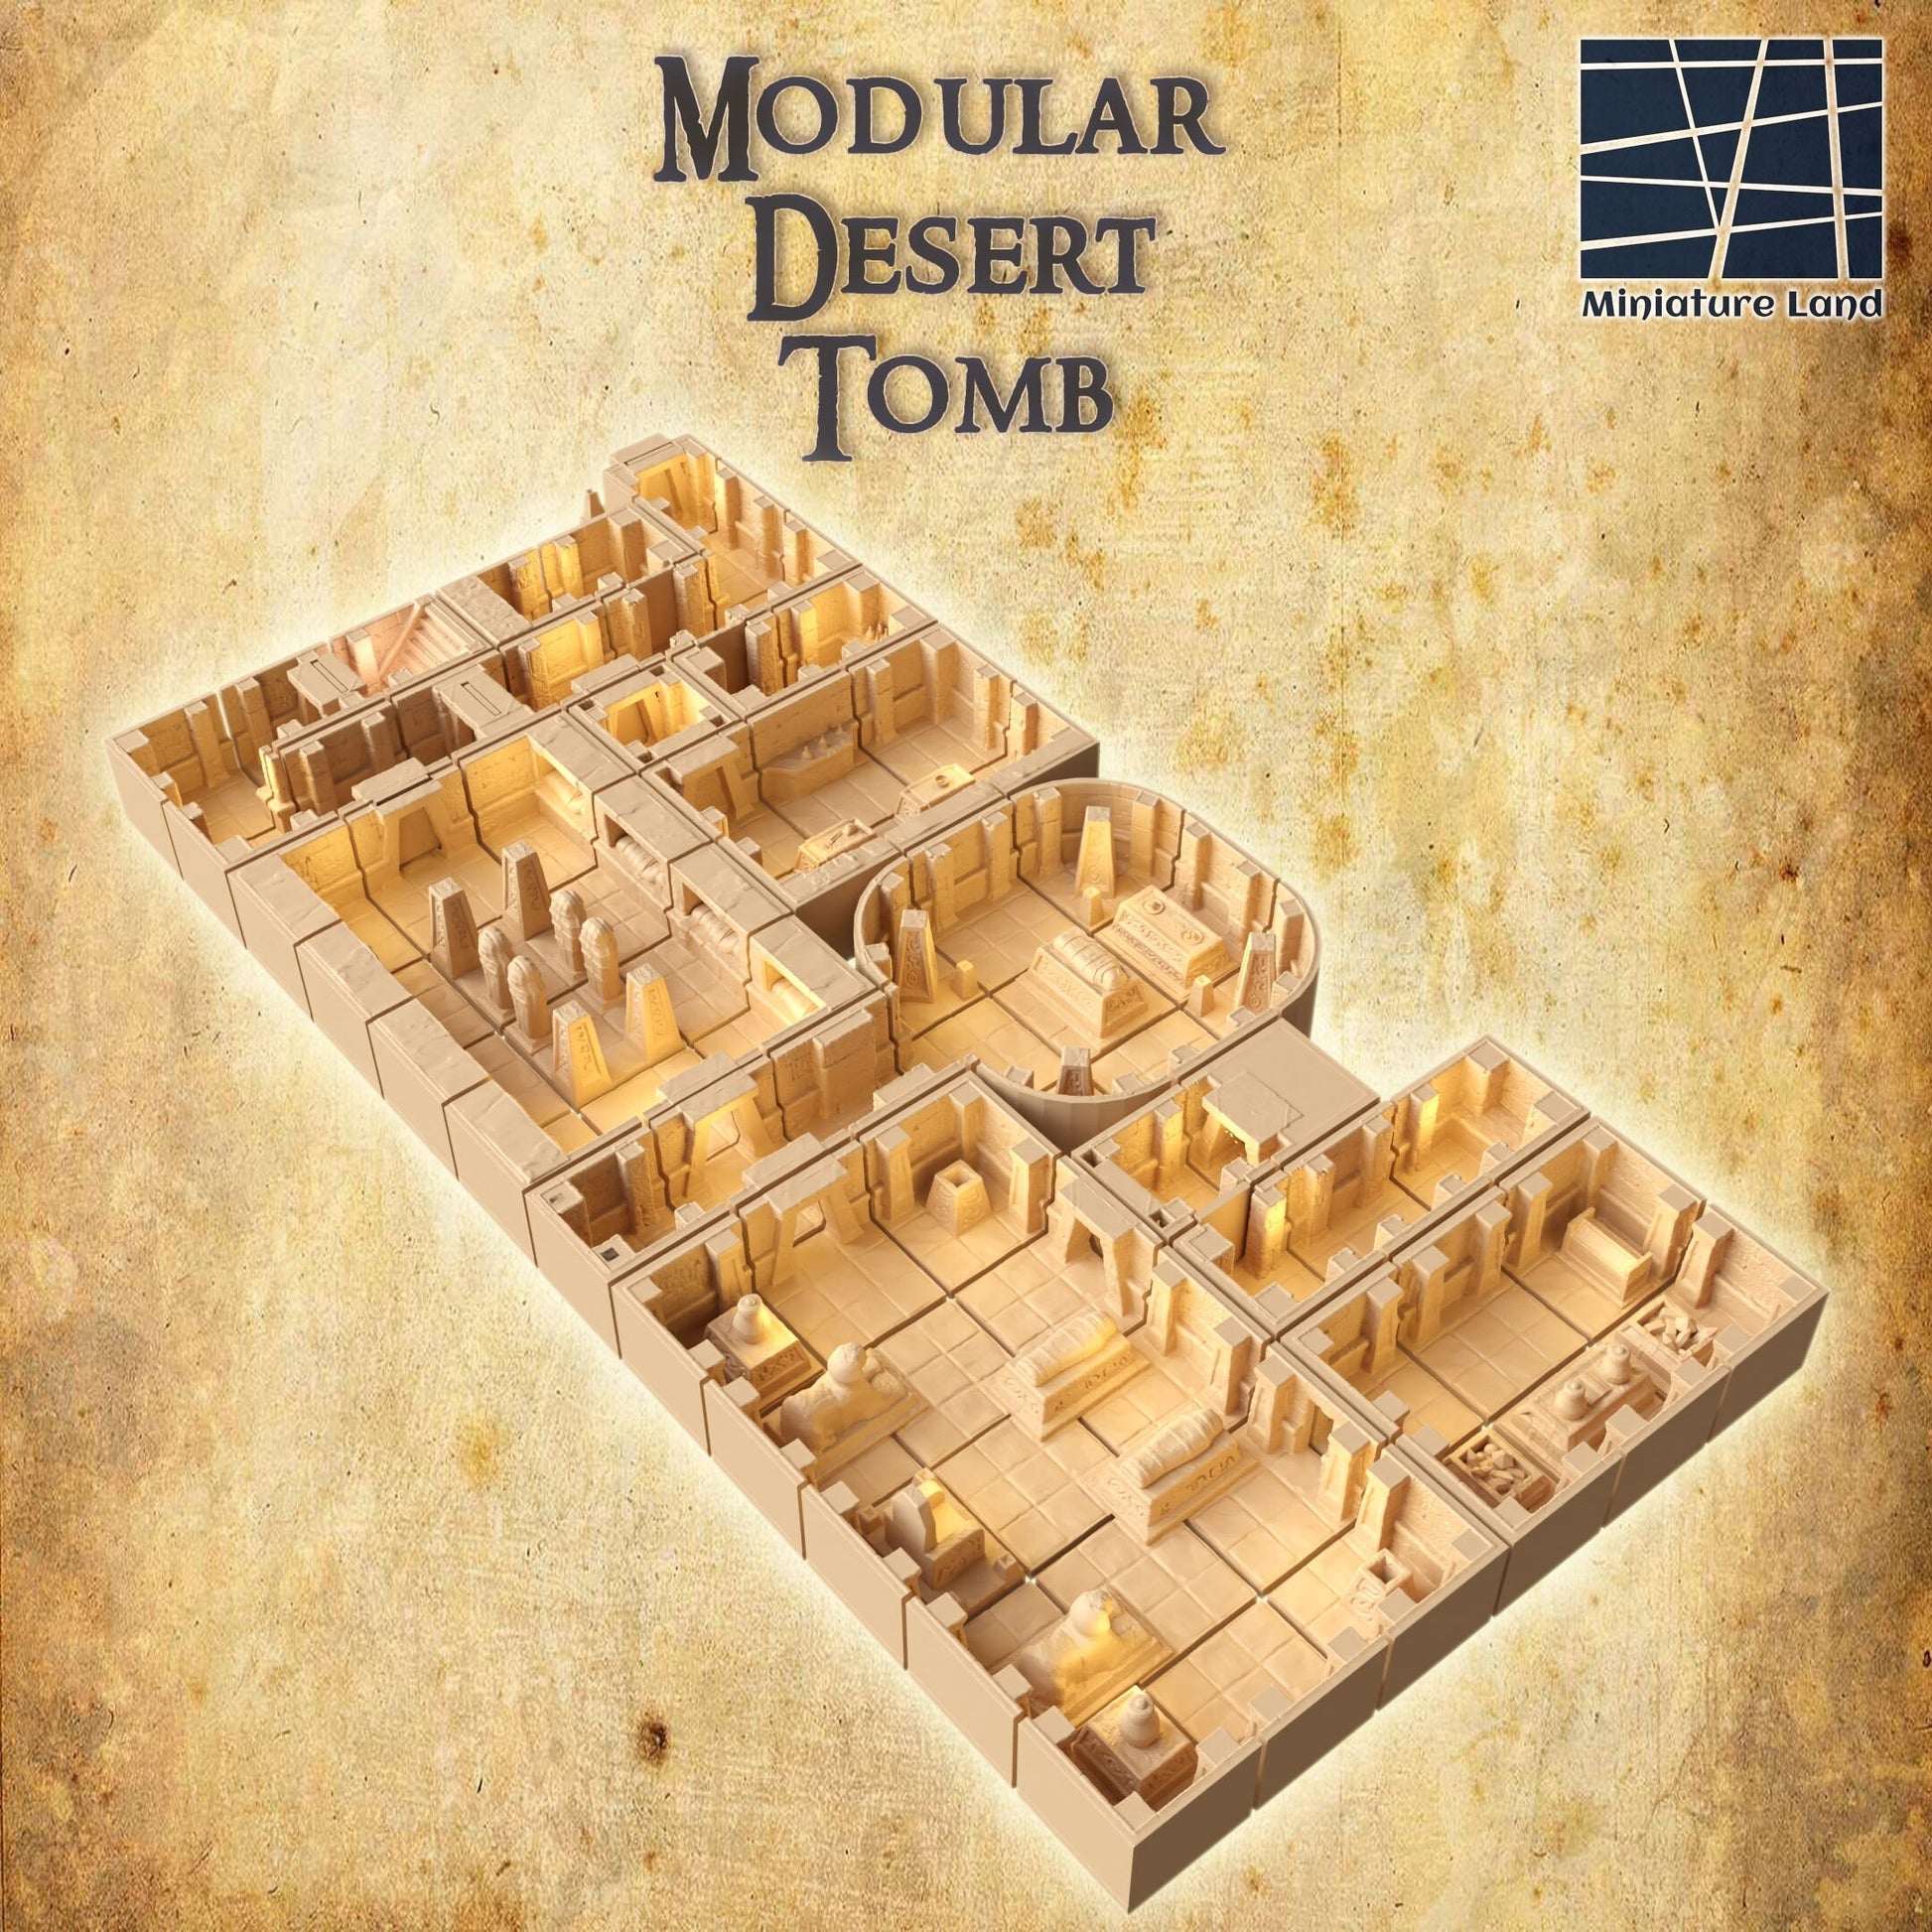 Modular Desert Tomb